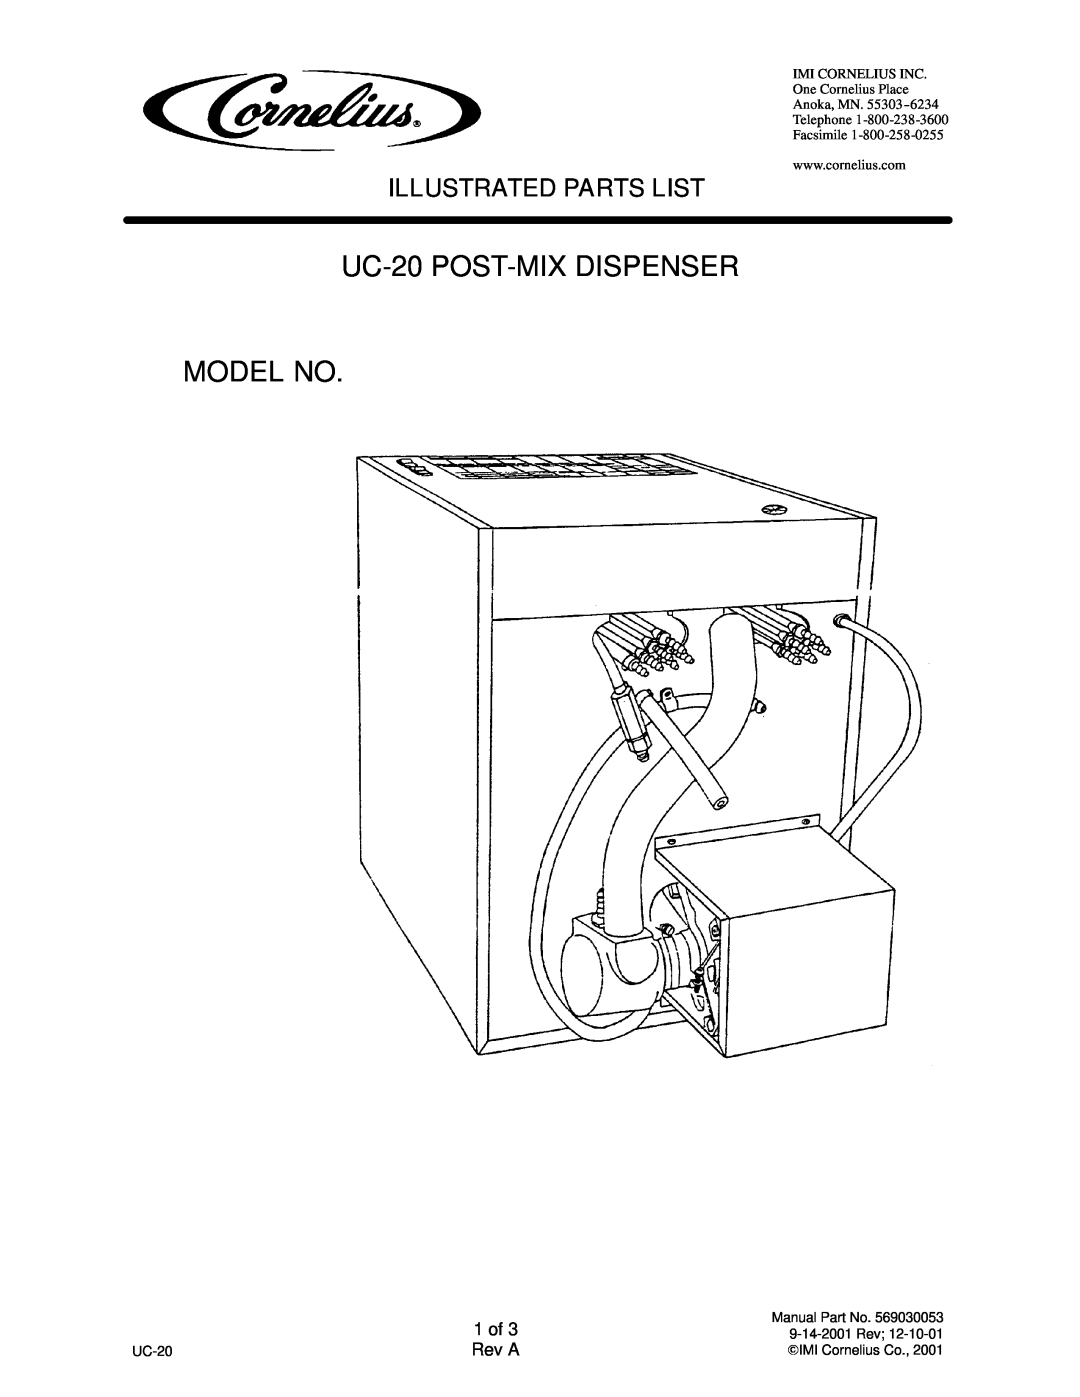 Cornelius manual UC-20 POST-MIXDISPENSER MODEL NO, Illustrated Parts List, 1 of, Rev A 